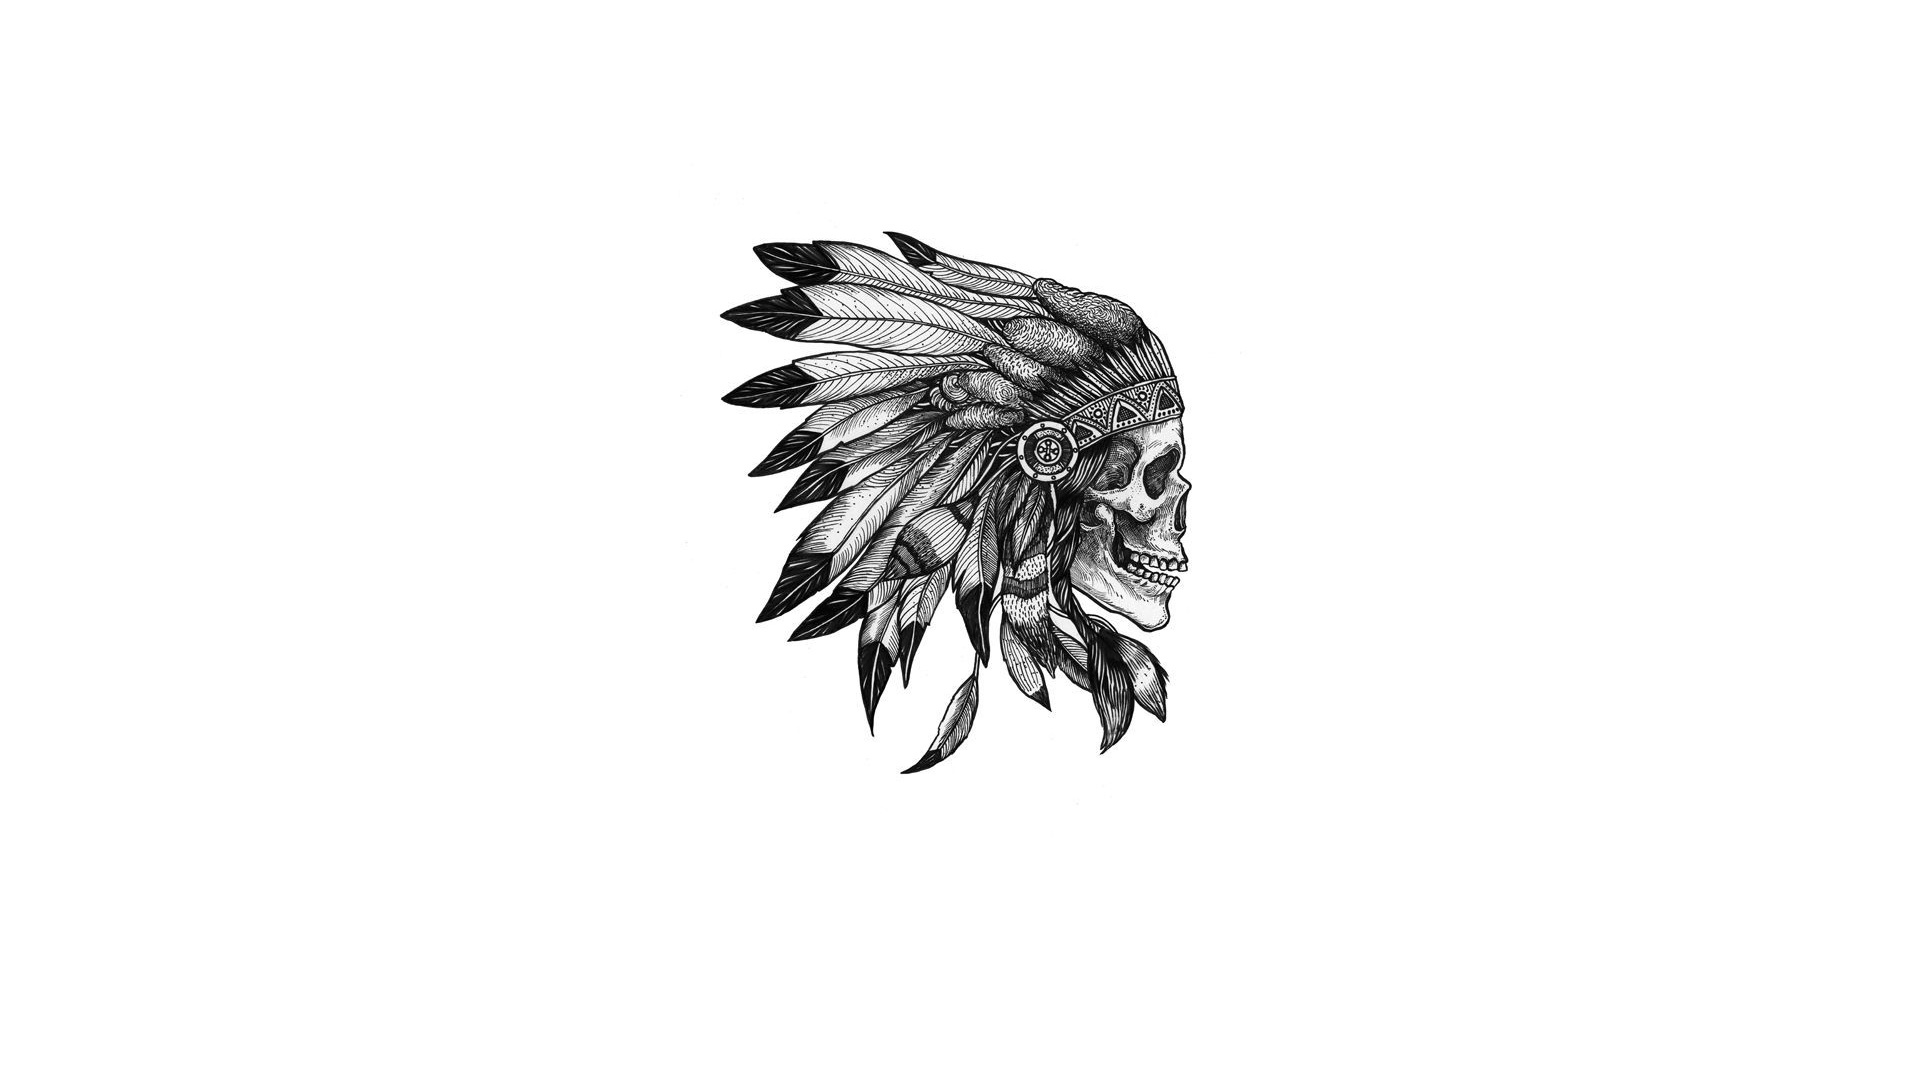 Peter John de Villiers, Digital art, Minimalism, White background, Skull, Native American clothing, Feathers, Monochrome, Drawing, Headband, Simple background Wallpaper